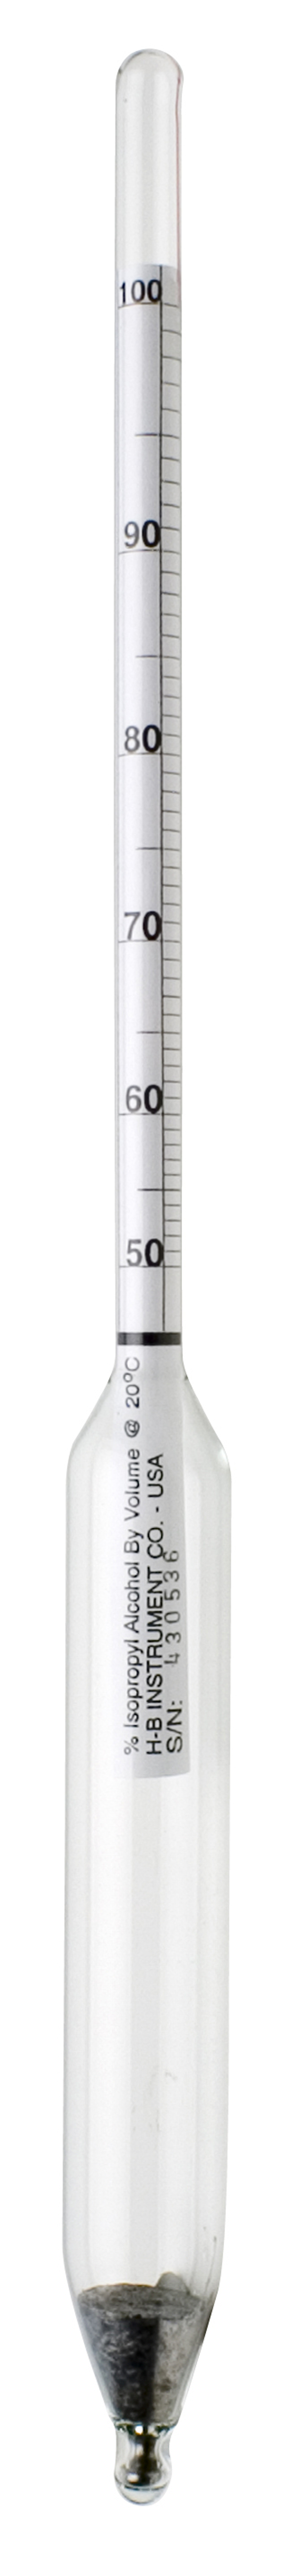 SP Bel-Art, H-B DURAC 0/50 Percent Isopropyl Alcohol Hydrometer 